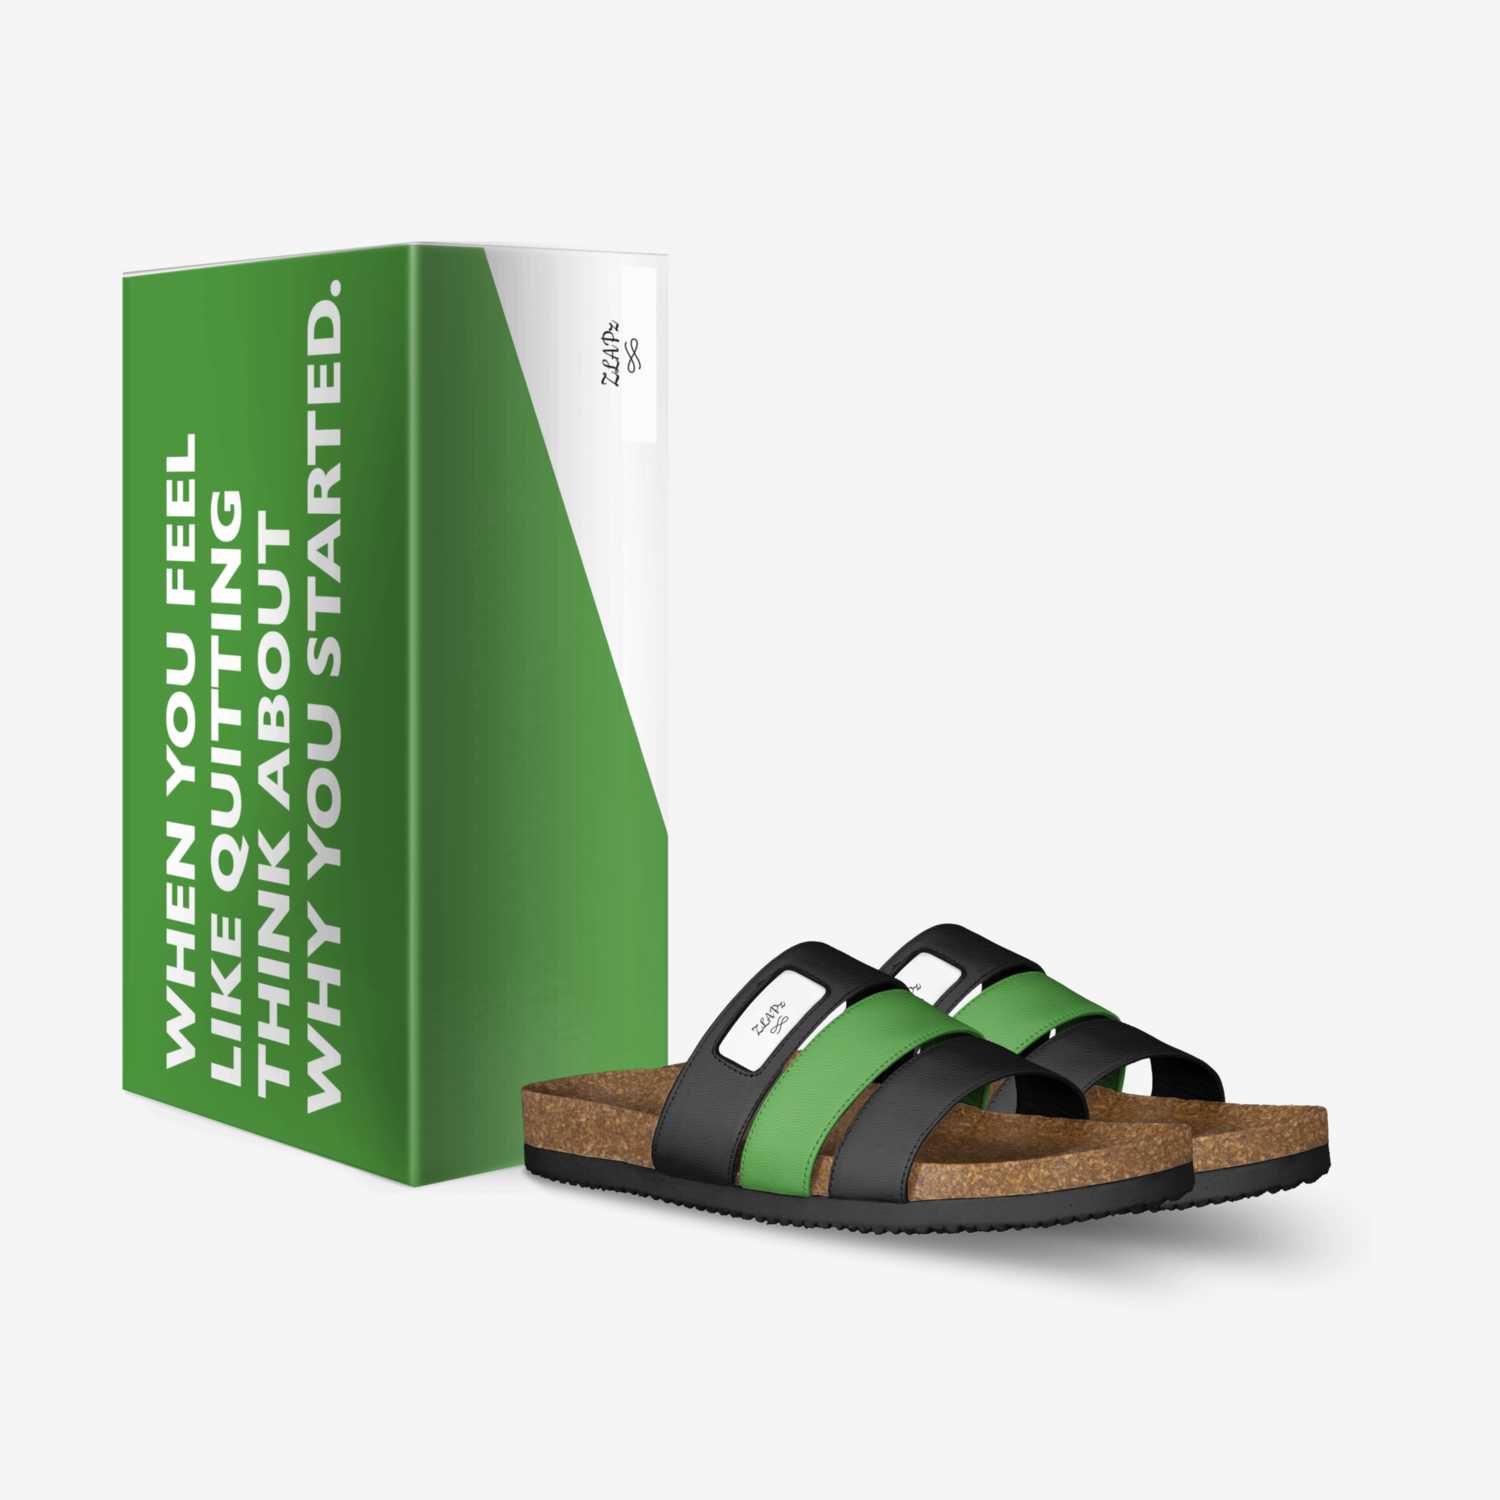 ZLAPz custom made in Italy shoes by Dakid Zlaplife | Box view